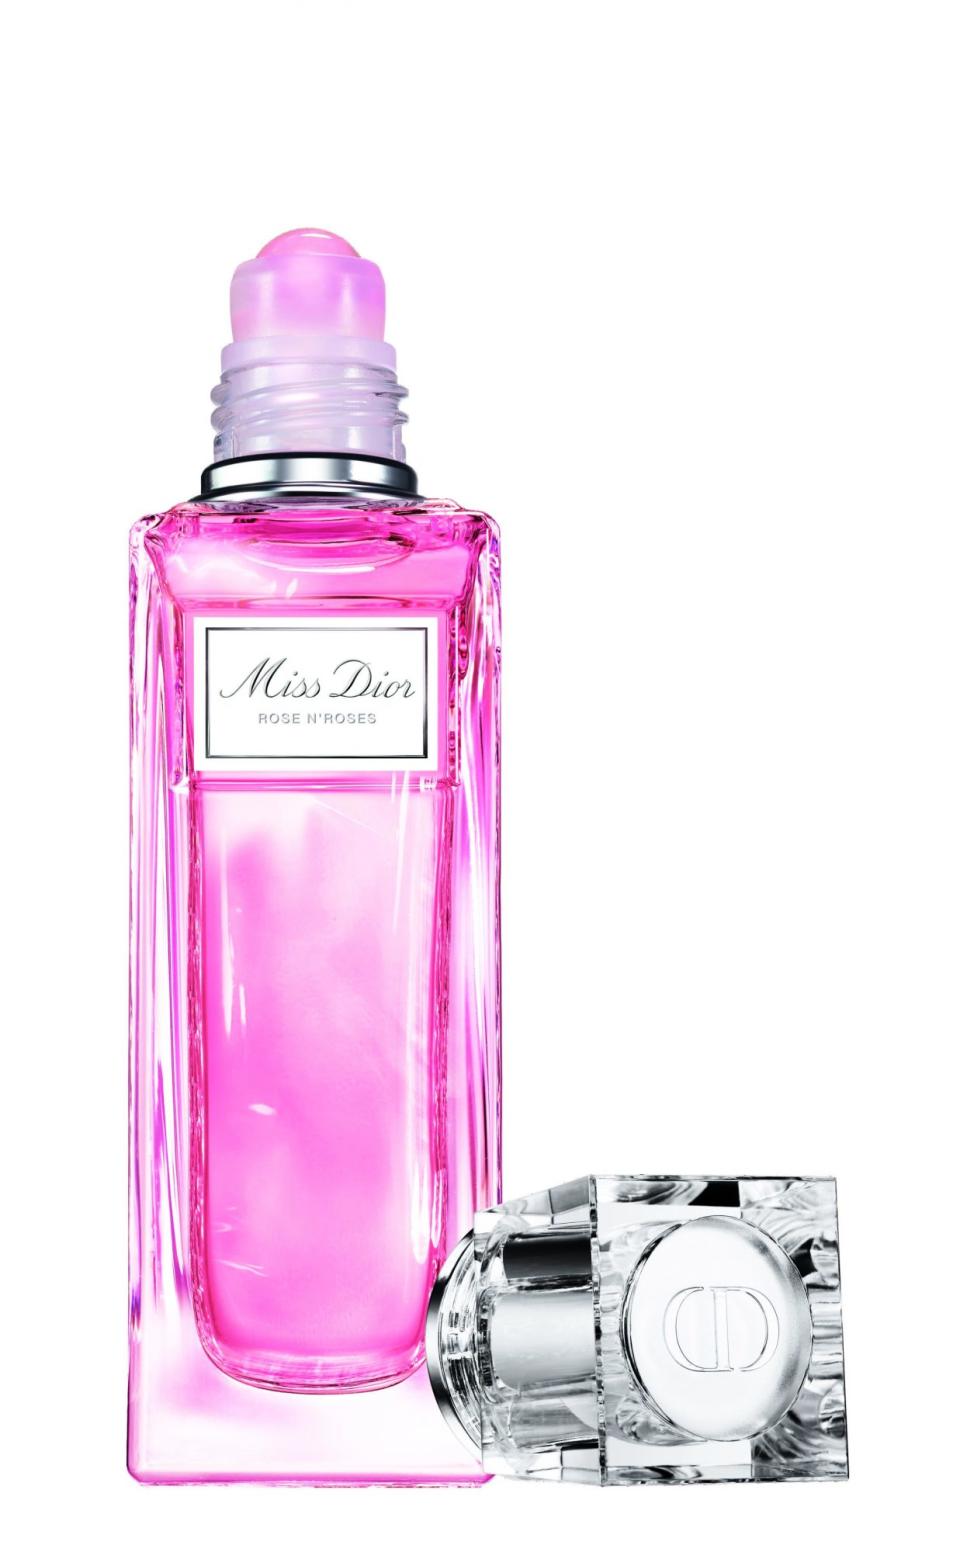 <p>Una original propuesta en roll-on para llevar siempre encima y poder refrescarte en cualquier momento del día con esta maravillosa y femenina fragancia elaborada con rosas de Grasse, típicas francesas, y rosas de Damasco.<br>Miss Dior Rose N'Roses Roller Pearl, de <strong>Dior</strong>. $38. <a href="https://click.linksynergy.com/deeplink?id=93xLBvPhAeE&mid=2417&murl=https%3A%2F%2Fwww.sephora.com%2Fproduct%2Fmiss-dior-eau-de-toilette-rollerpearl-P440916&u1=PESPElaromadelamorperfumespararegalarenSanValentnpsopesenPonGal10487662202101I" rel="sponsored noopener" target="_blank" data-ylk="slk:sephora.com;elm:context_link;itc:0;sec:content-canvas" class="link ">sephora.com </a></p>